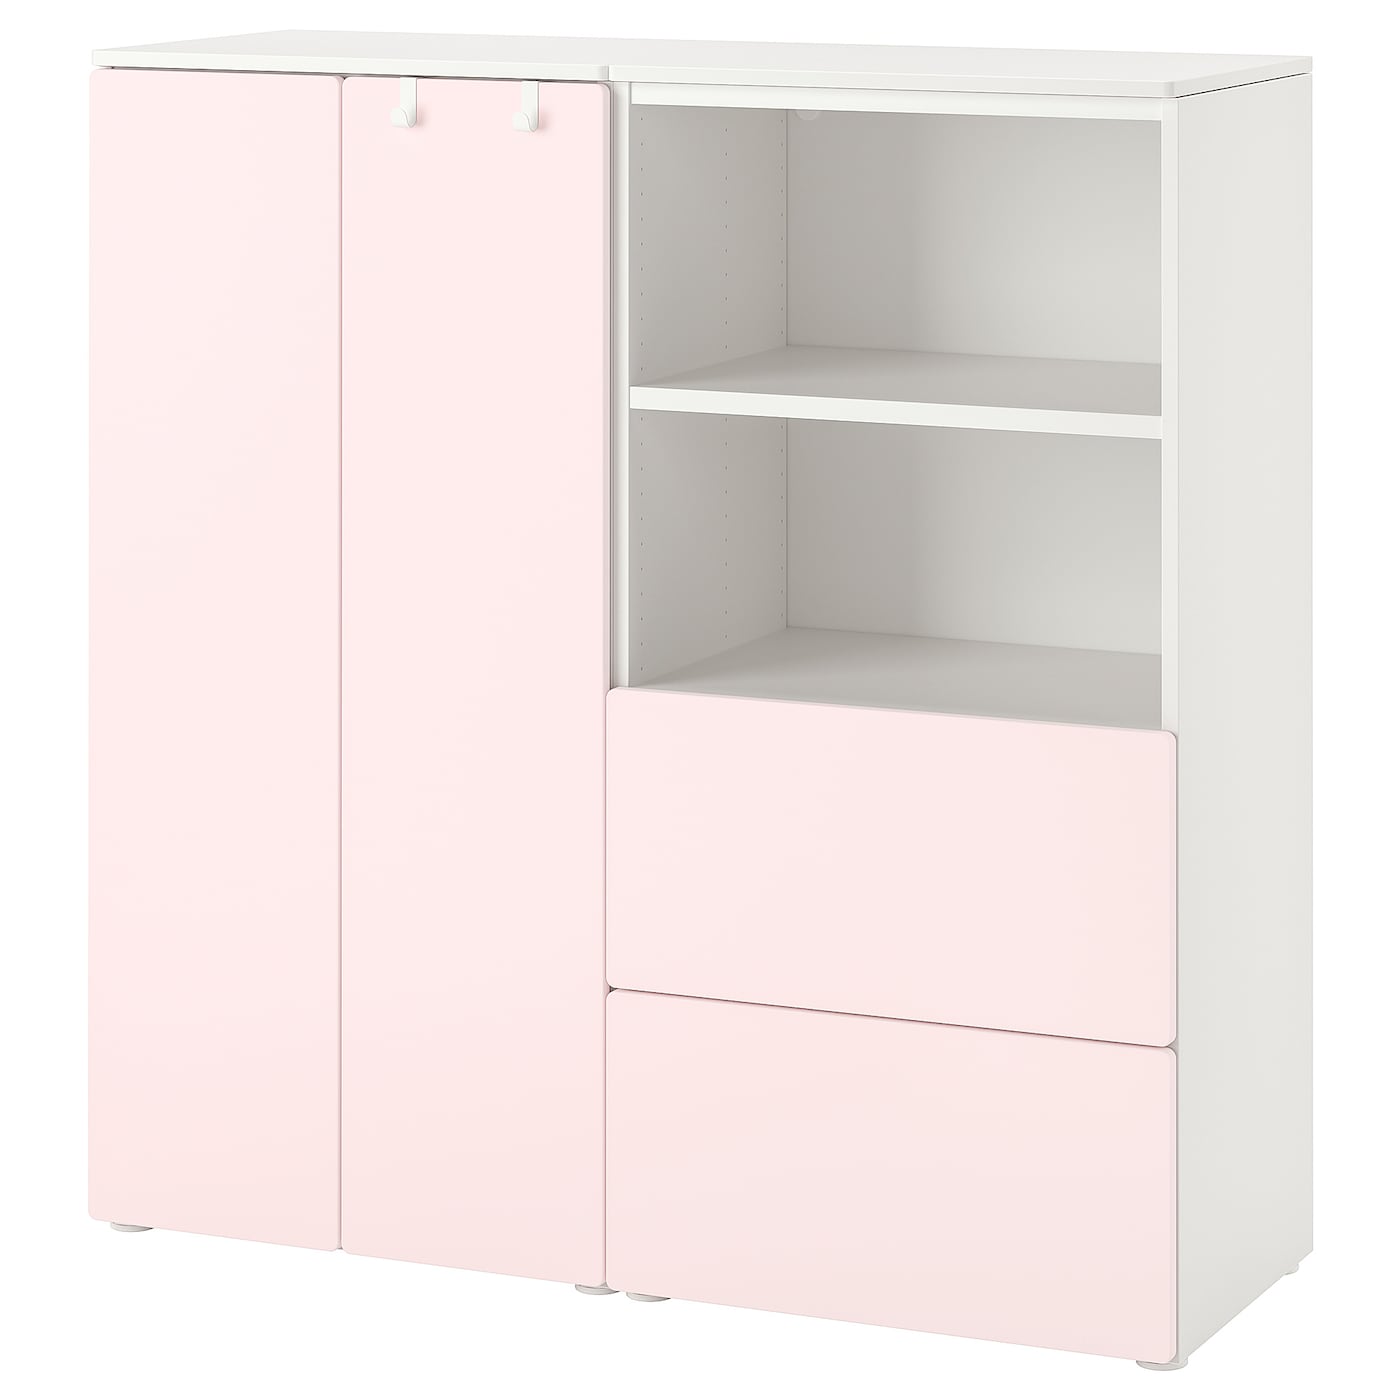 Шкаф - SMÅSTAD / SMАSTAD  IKEA /СМОСТАД  ИКЕА, 120x42x123 см, белый/розовый